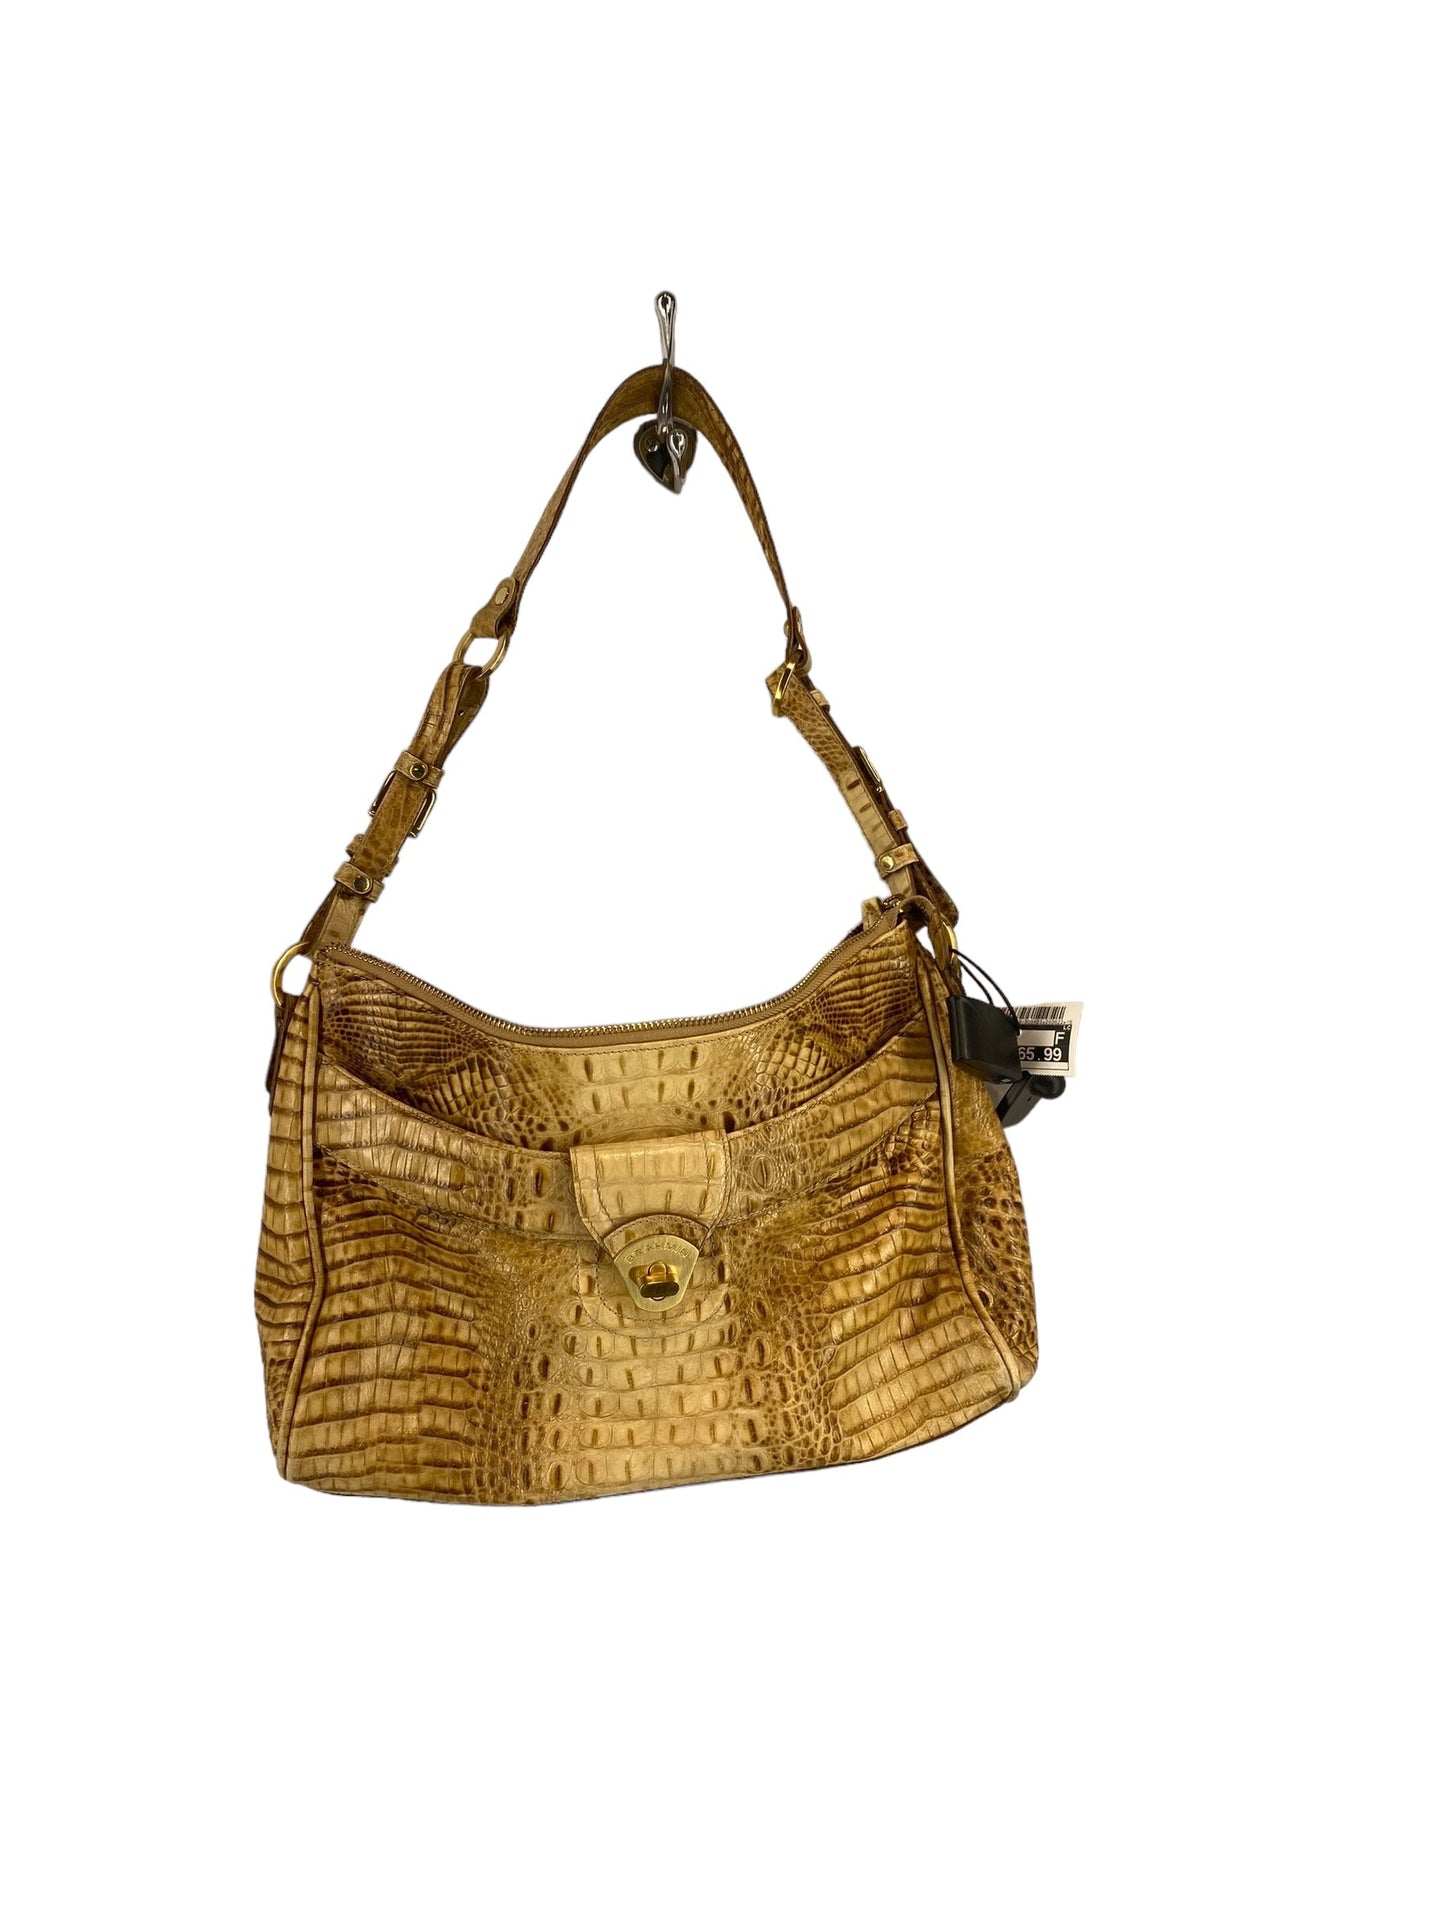 Handbag Leather Brahmin, Size Medium